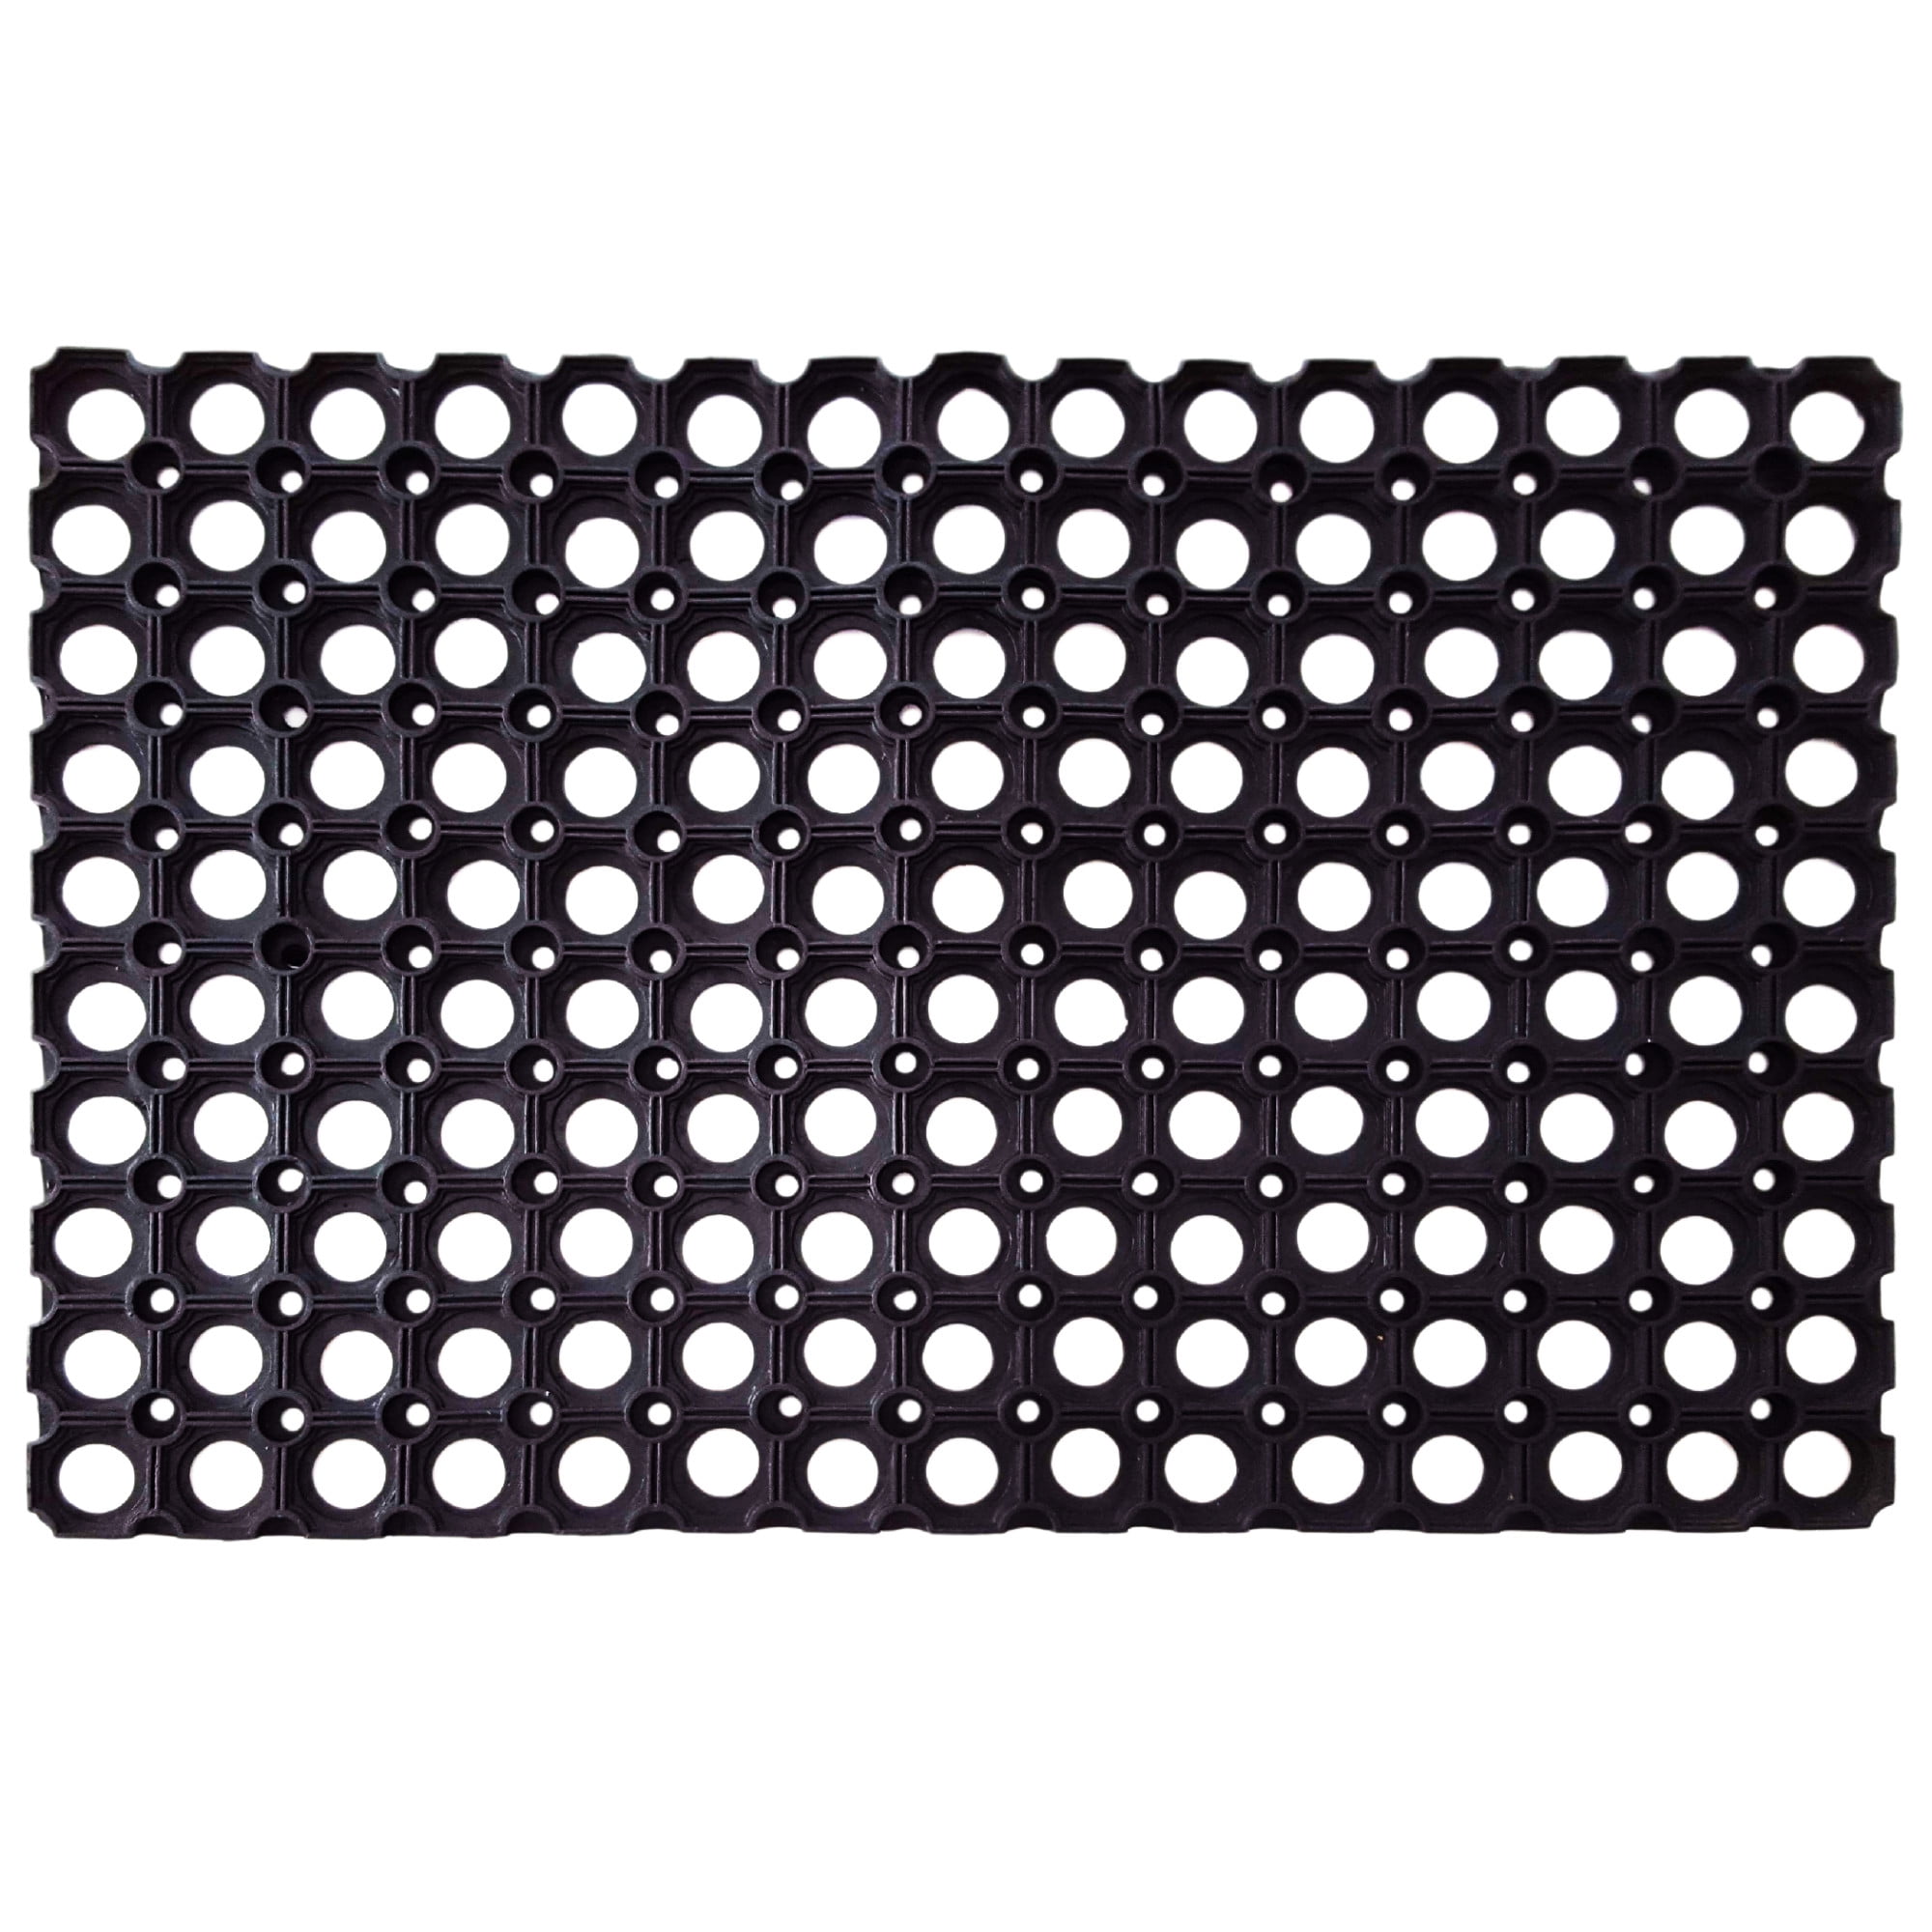 Rubber-Cal Foot-rest 28 in. x 31 in. Interlocking Black Anti-Fatigue Floor Mat Center Tile